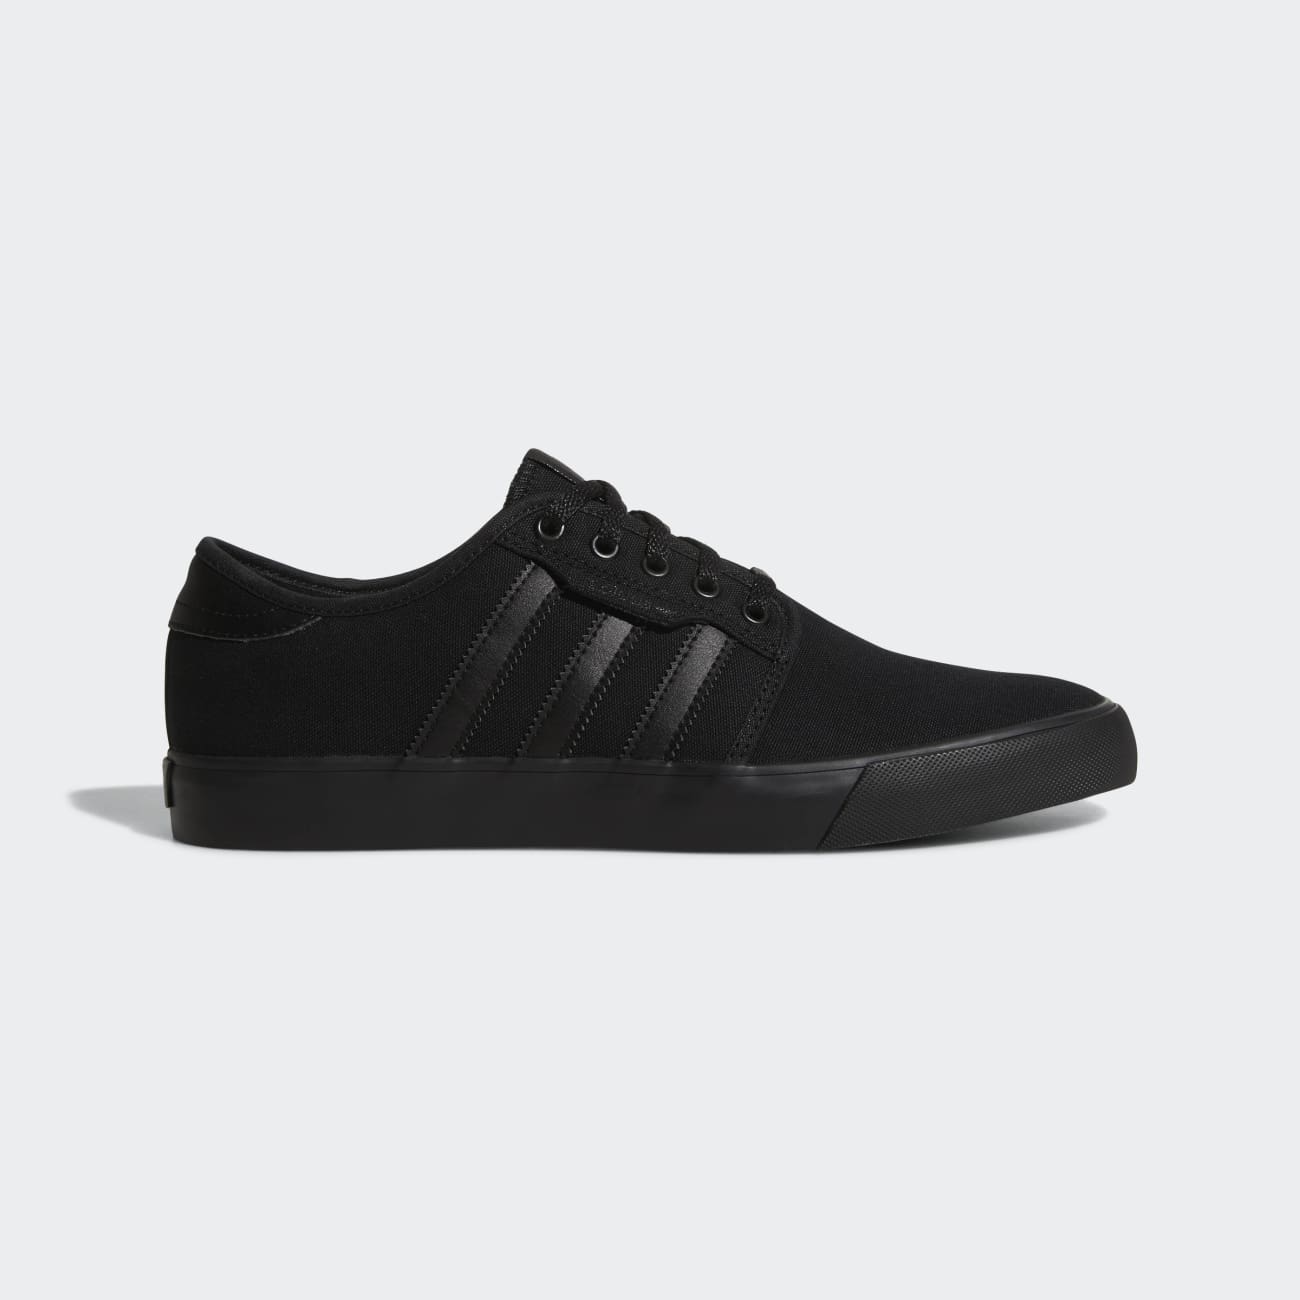 Adidas Seeley Férfi Originals Cipő - Fekete [D11118]